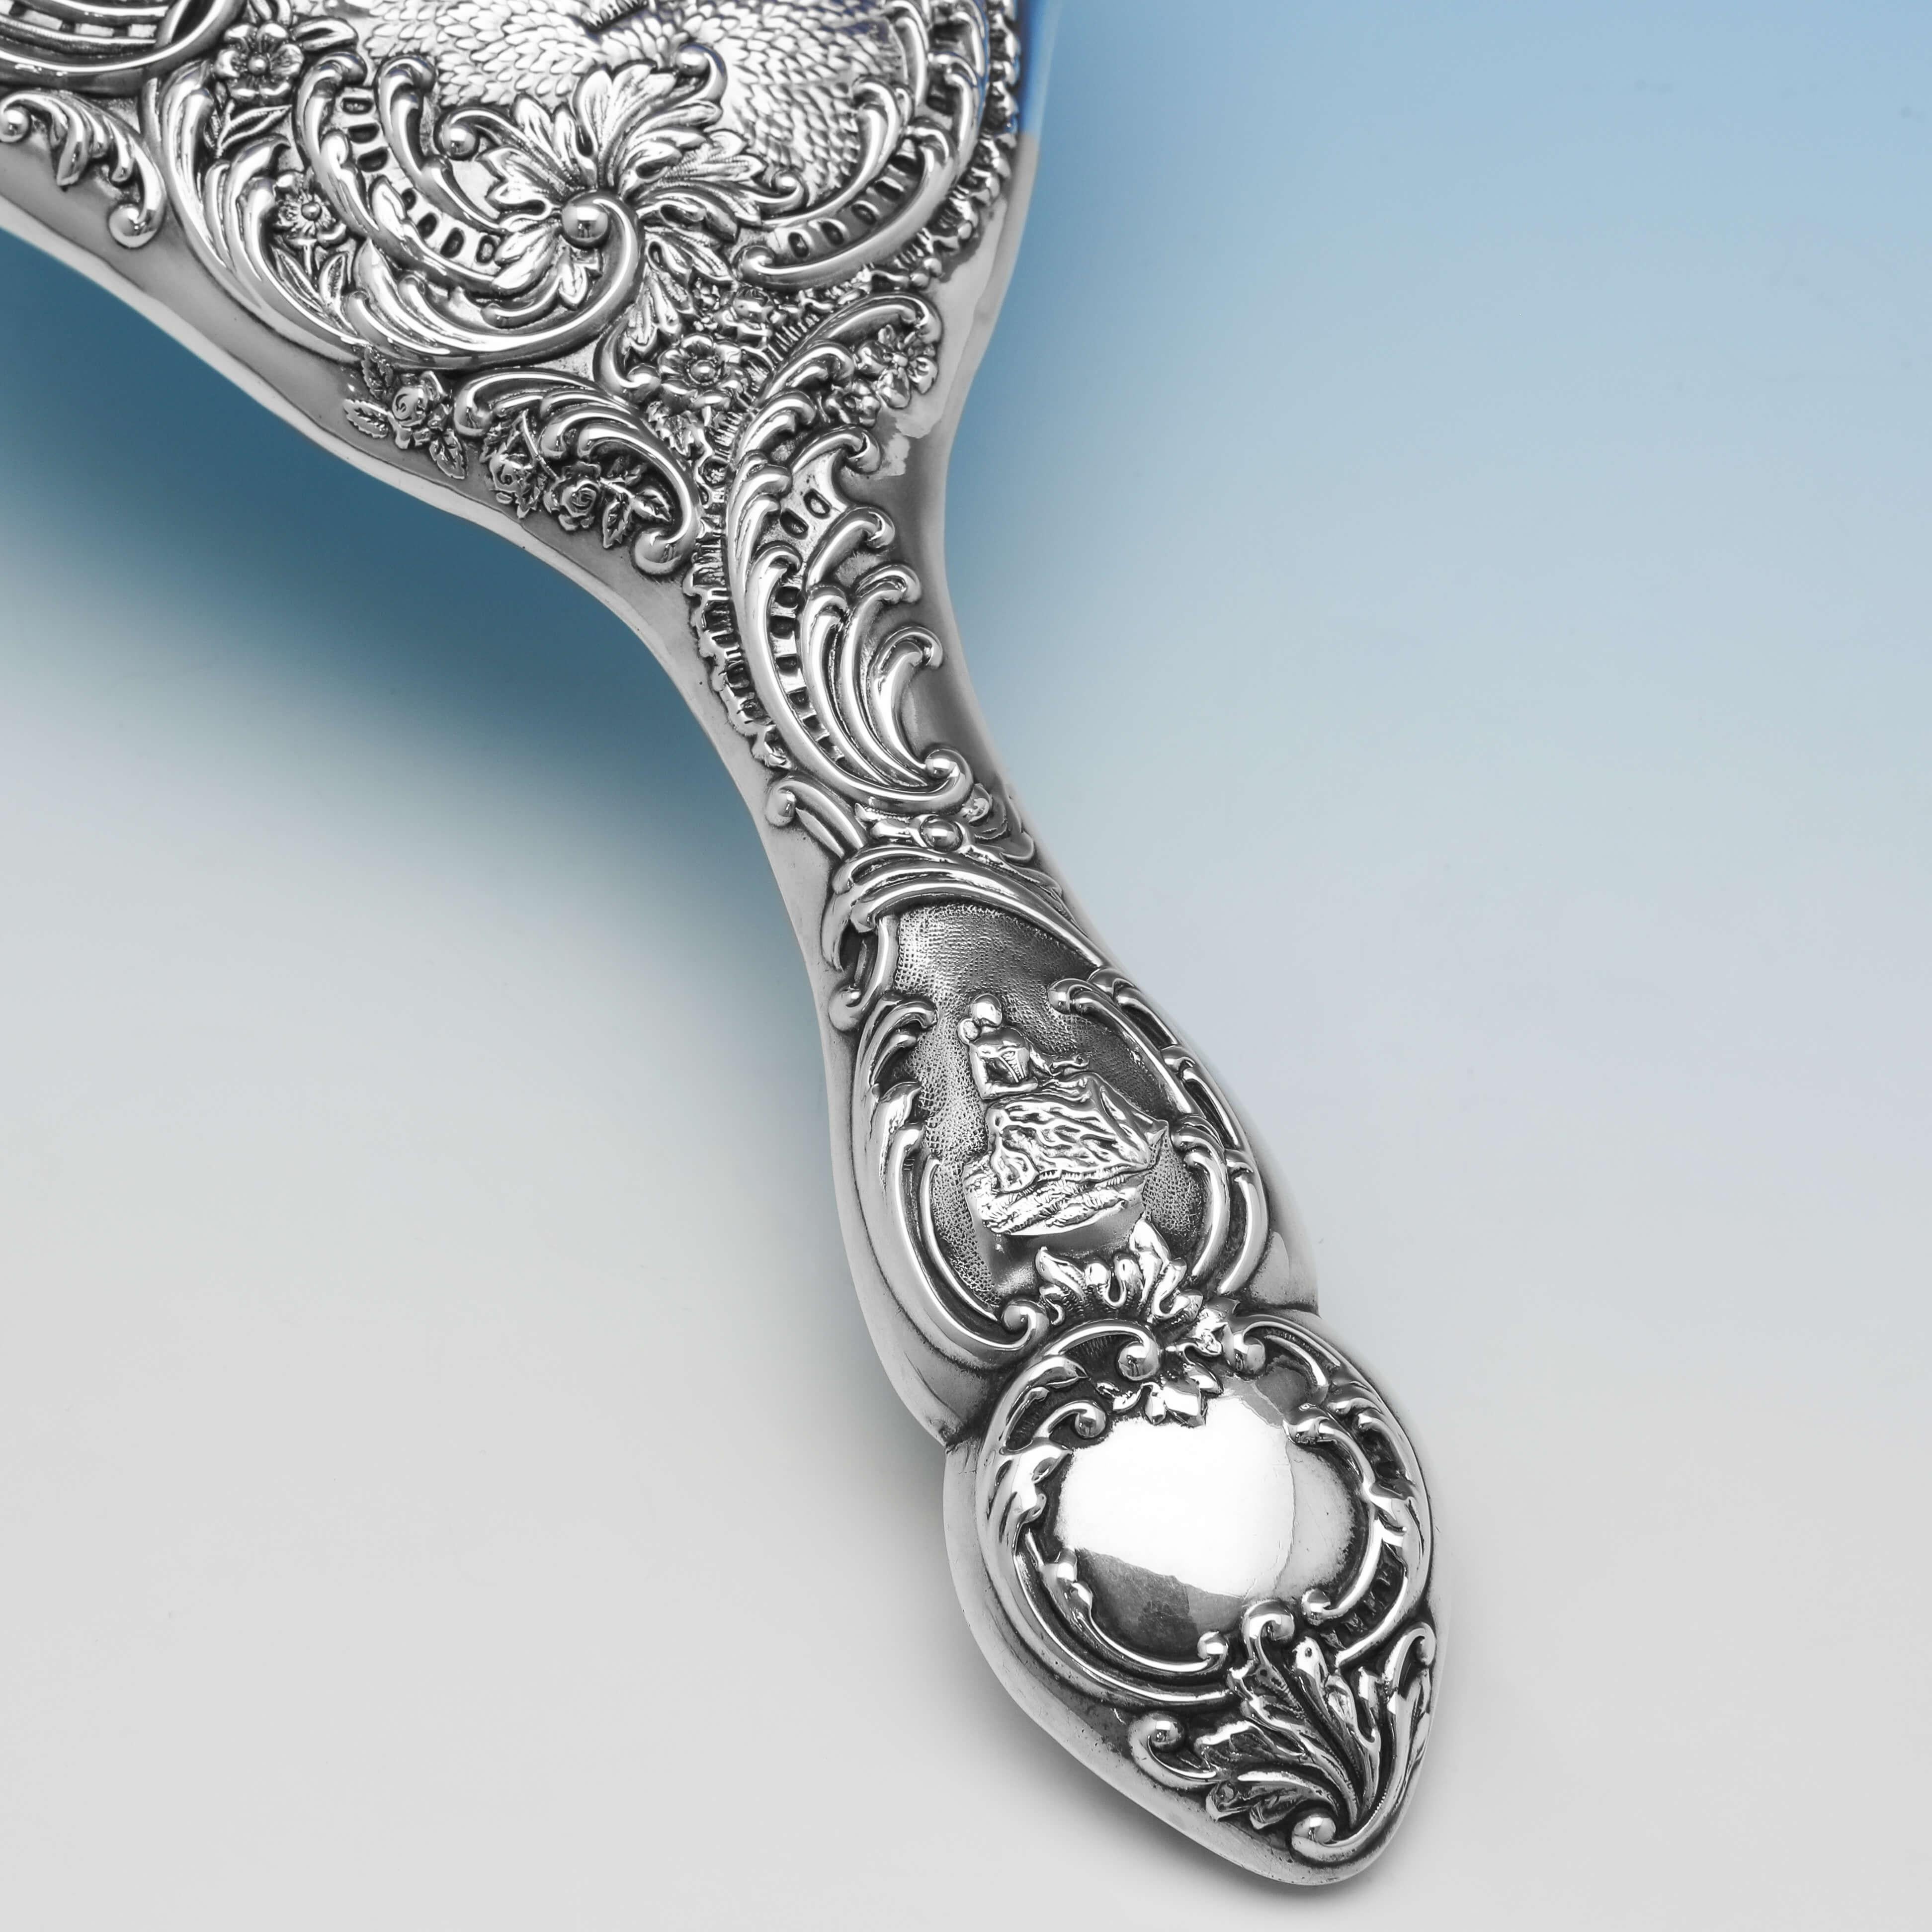 birks sterling silver hand mirror